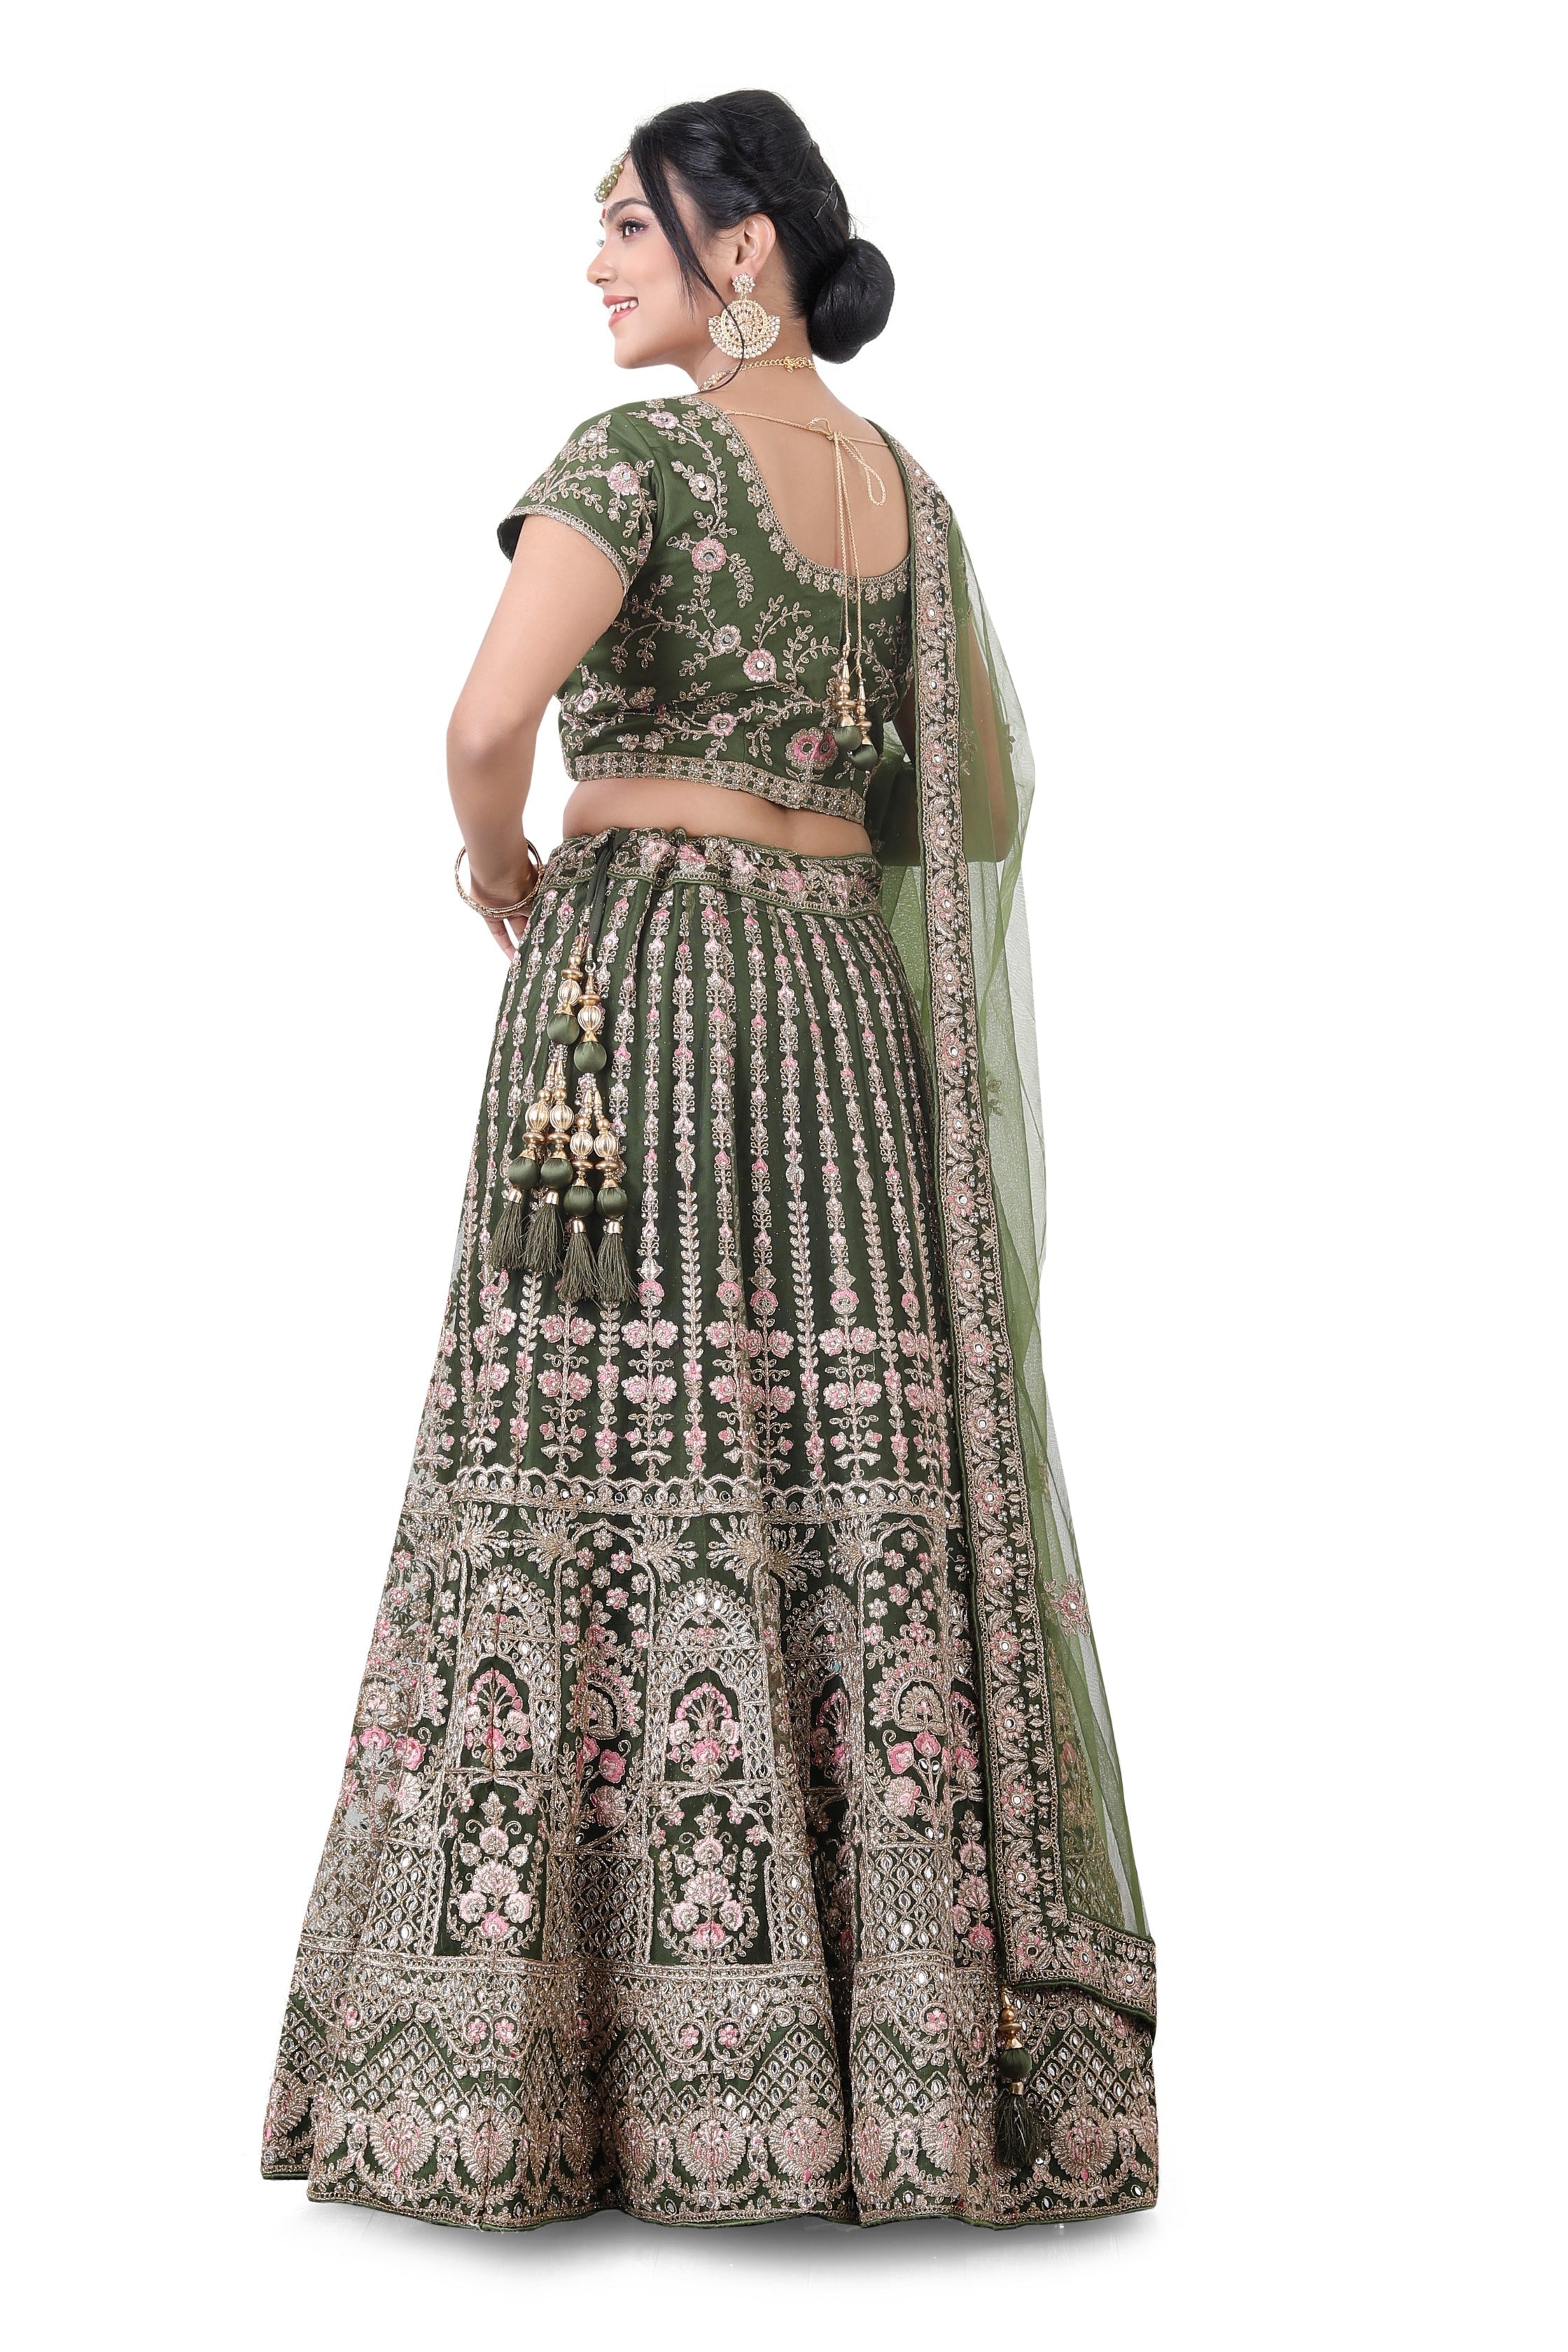 Green Net Bridal Lehenga Choli - Premium Partywear Lehenga from Dulhan Exclusives - Just $595! Shop now at Dulhan Exclusives